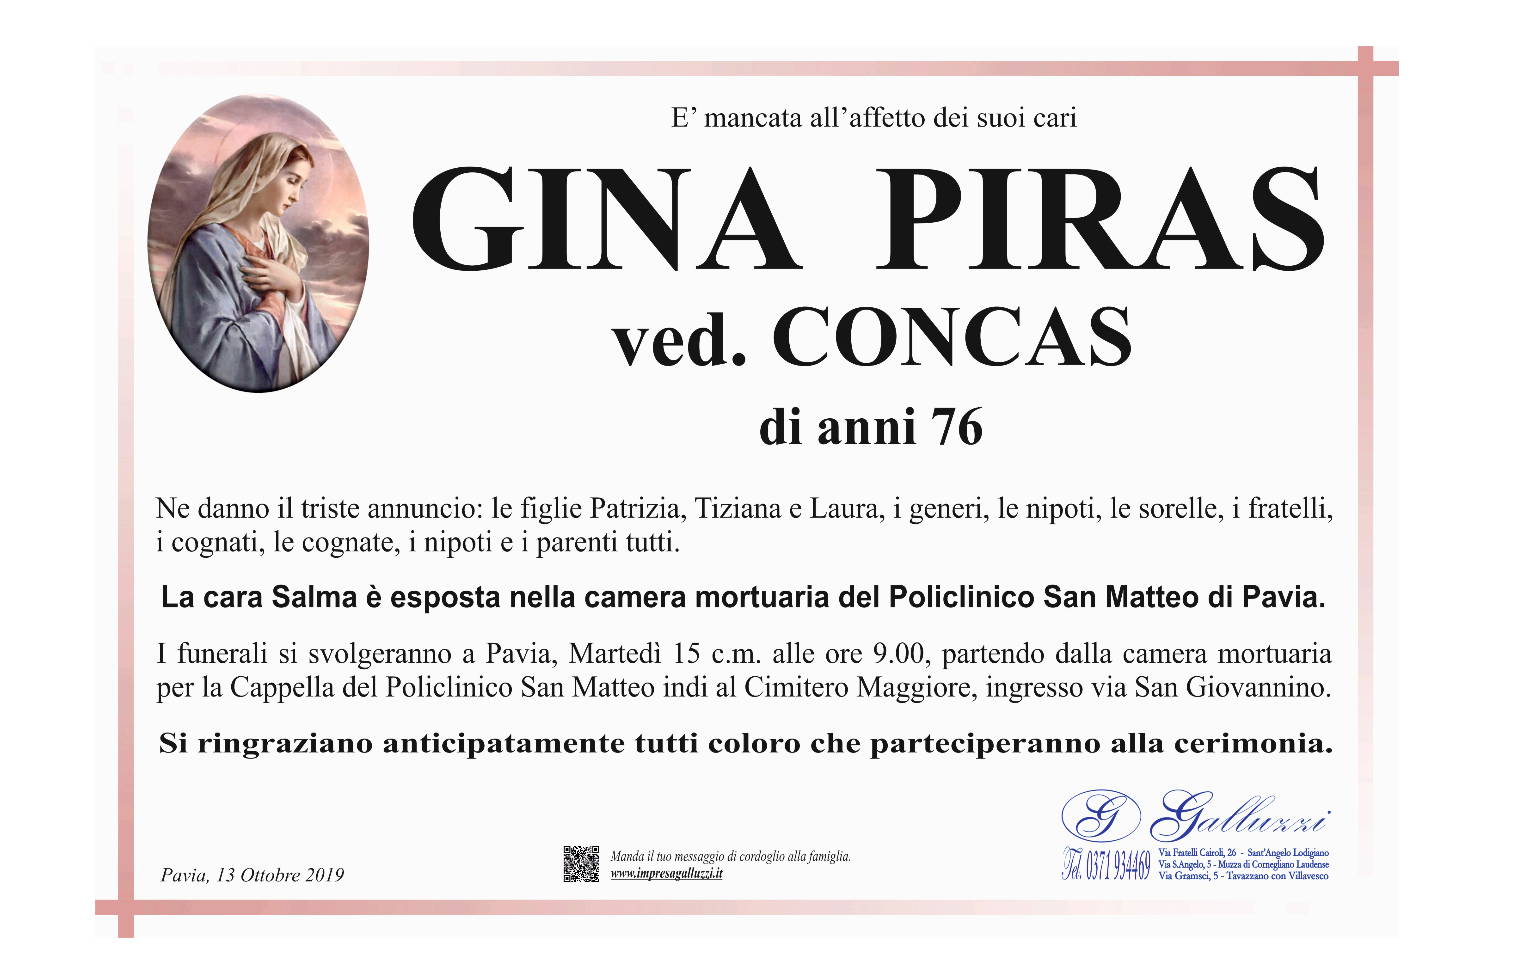 Gina Piras